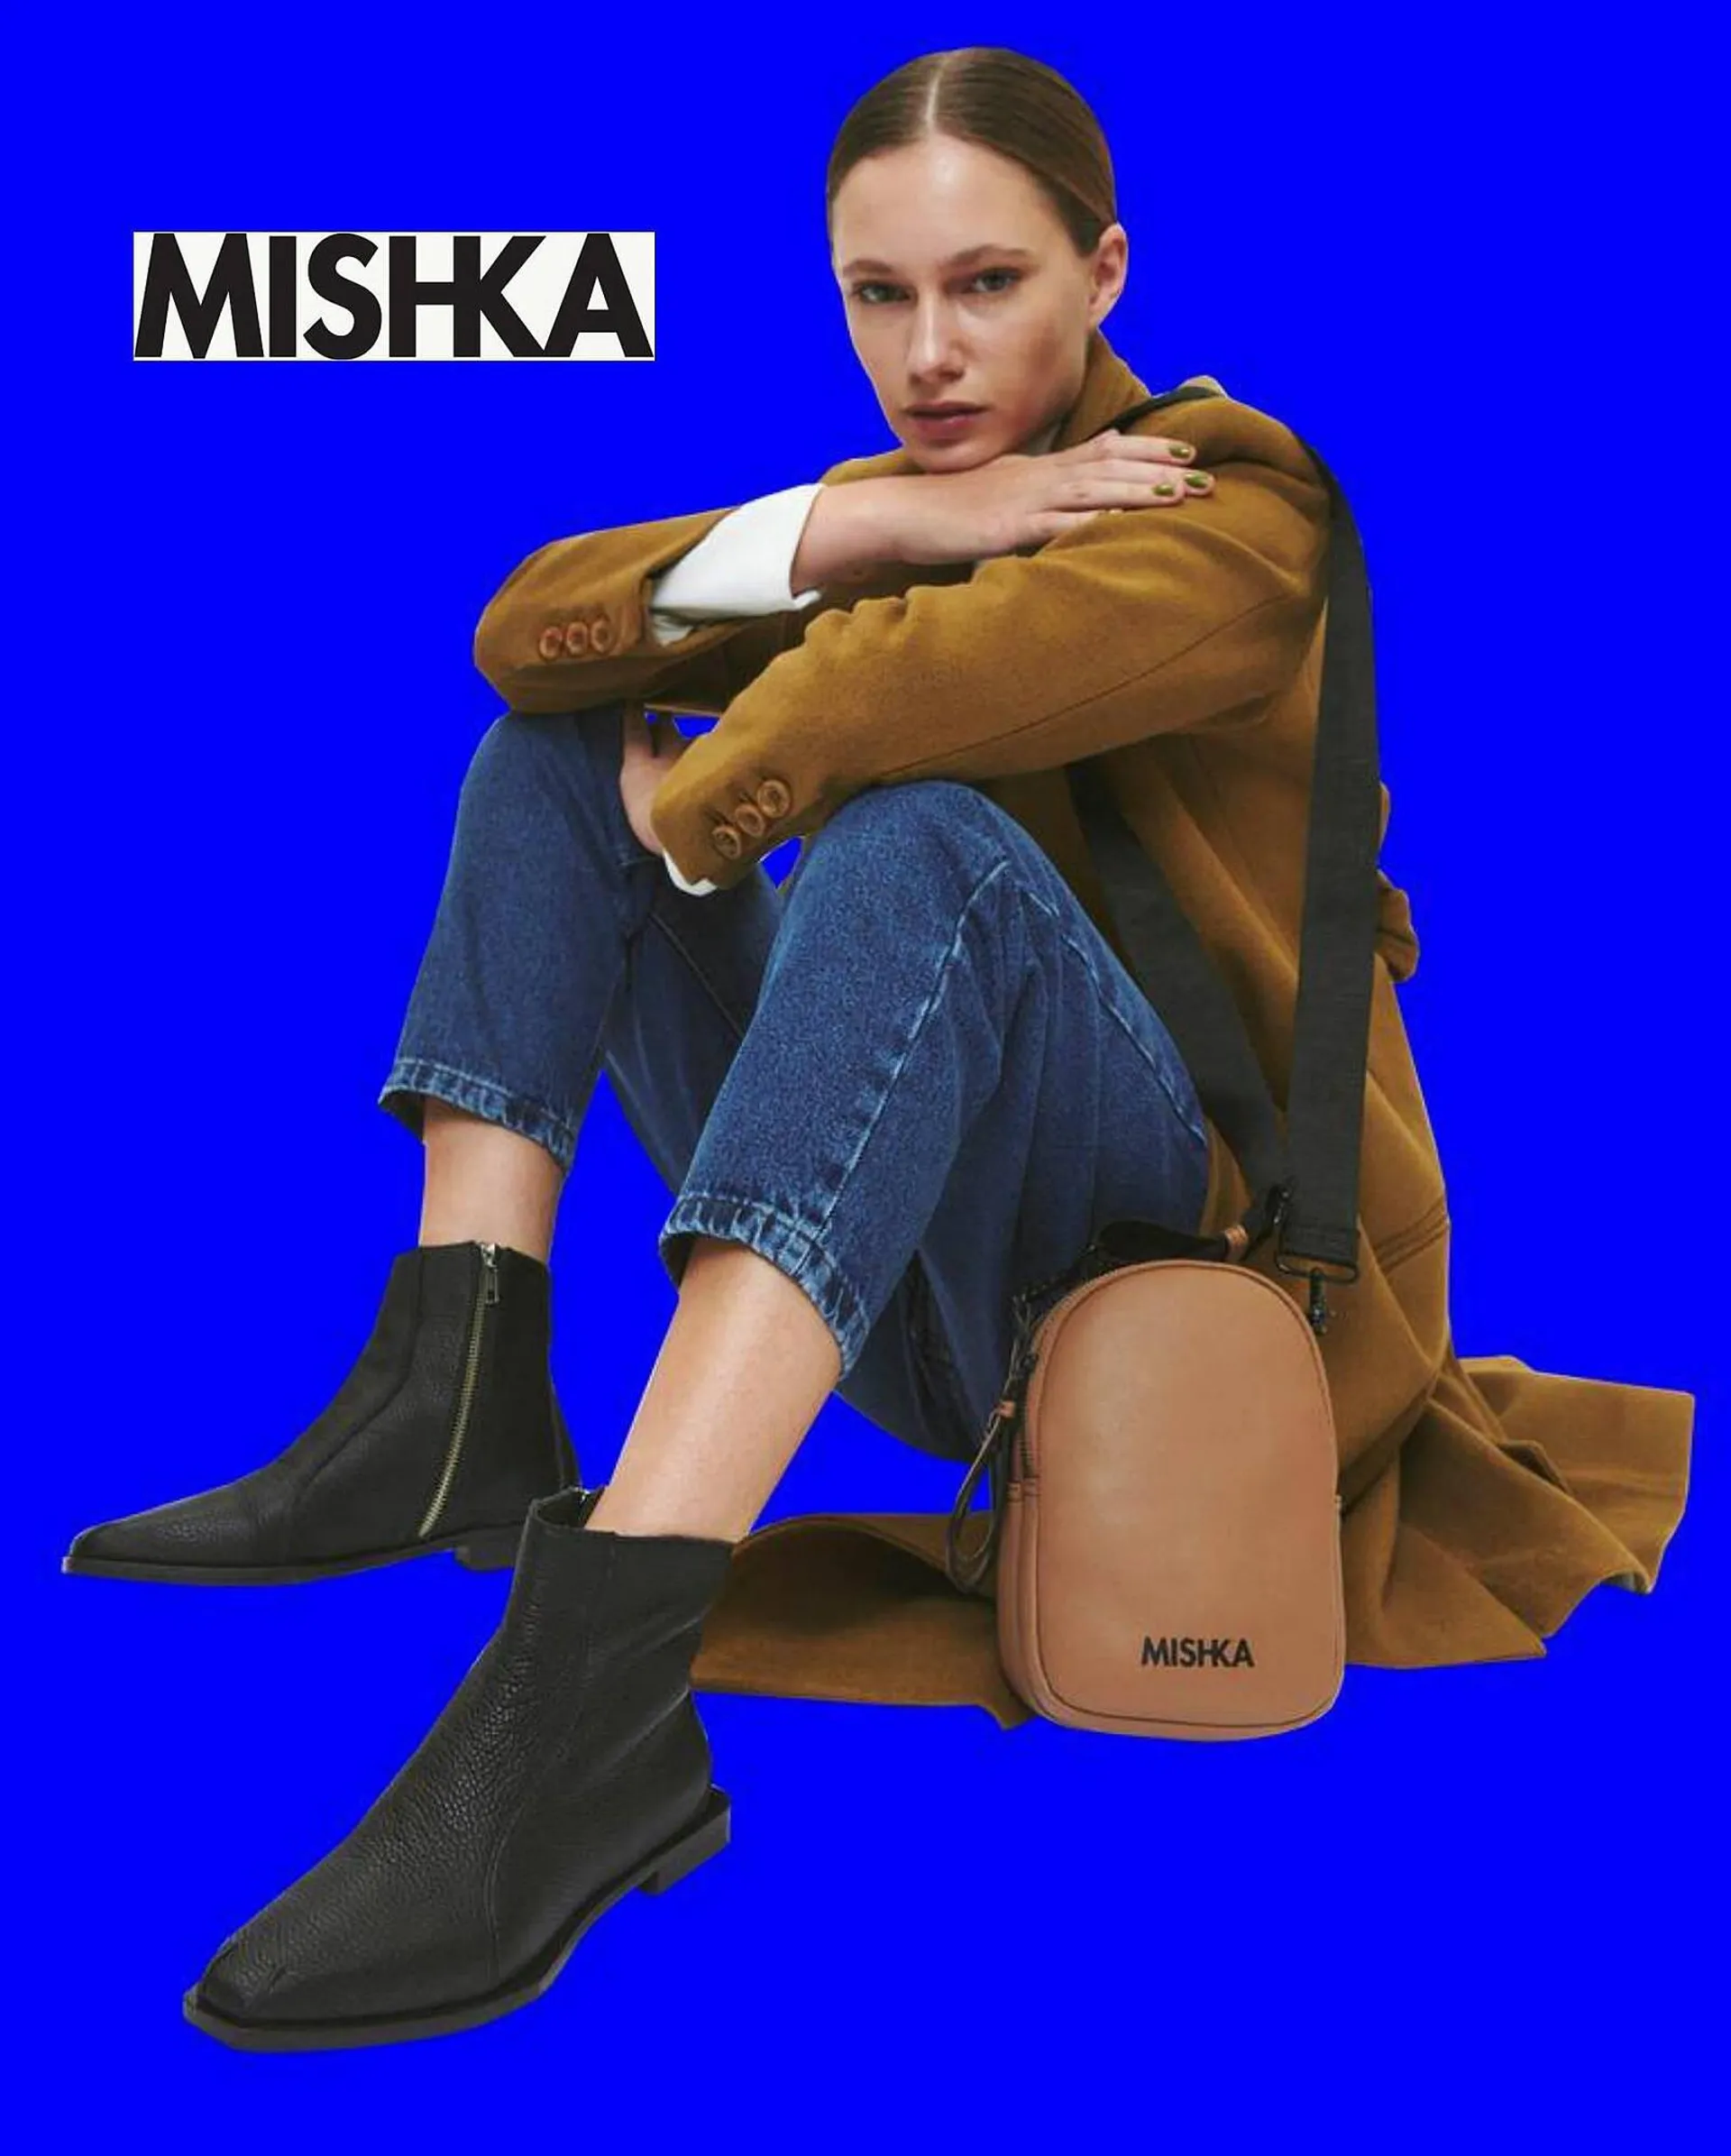 Catálogo Mishka